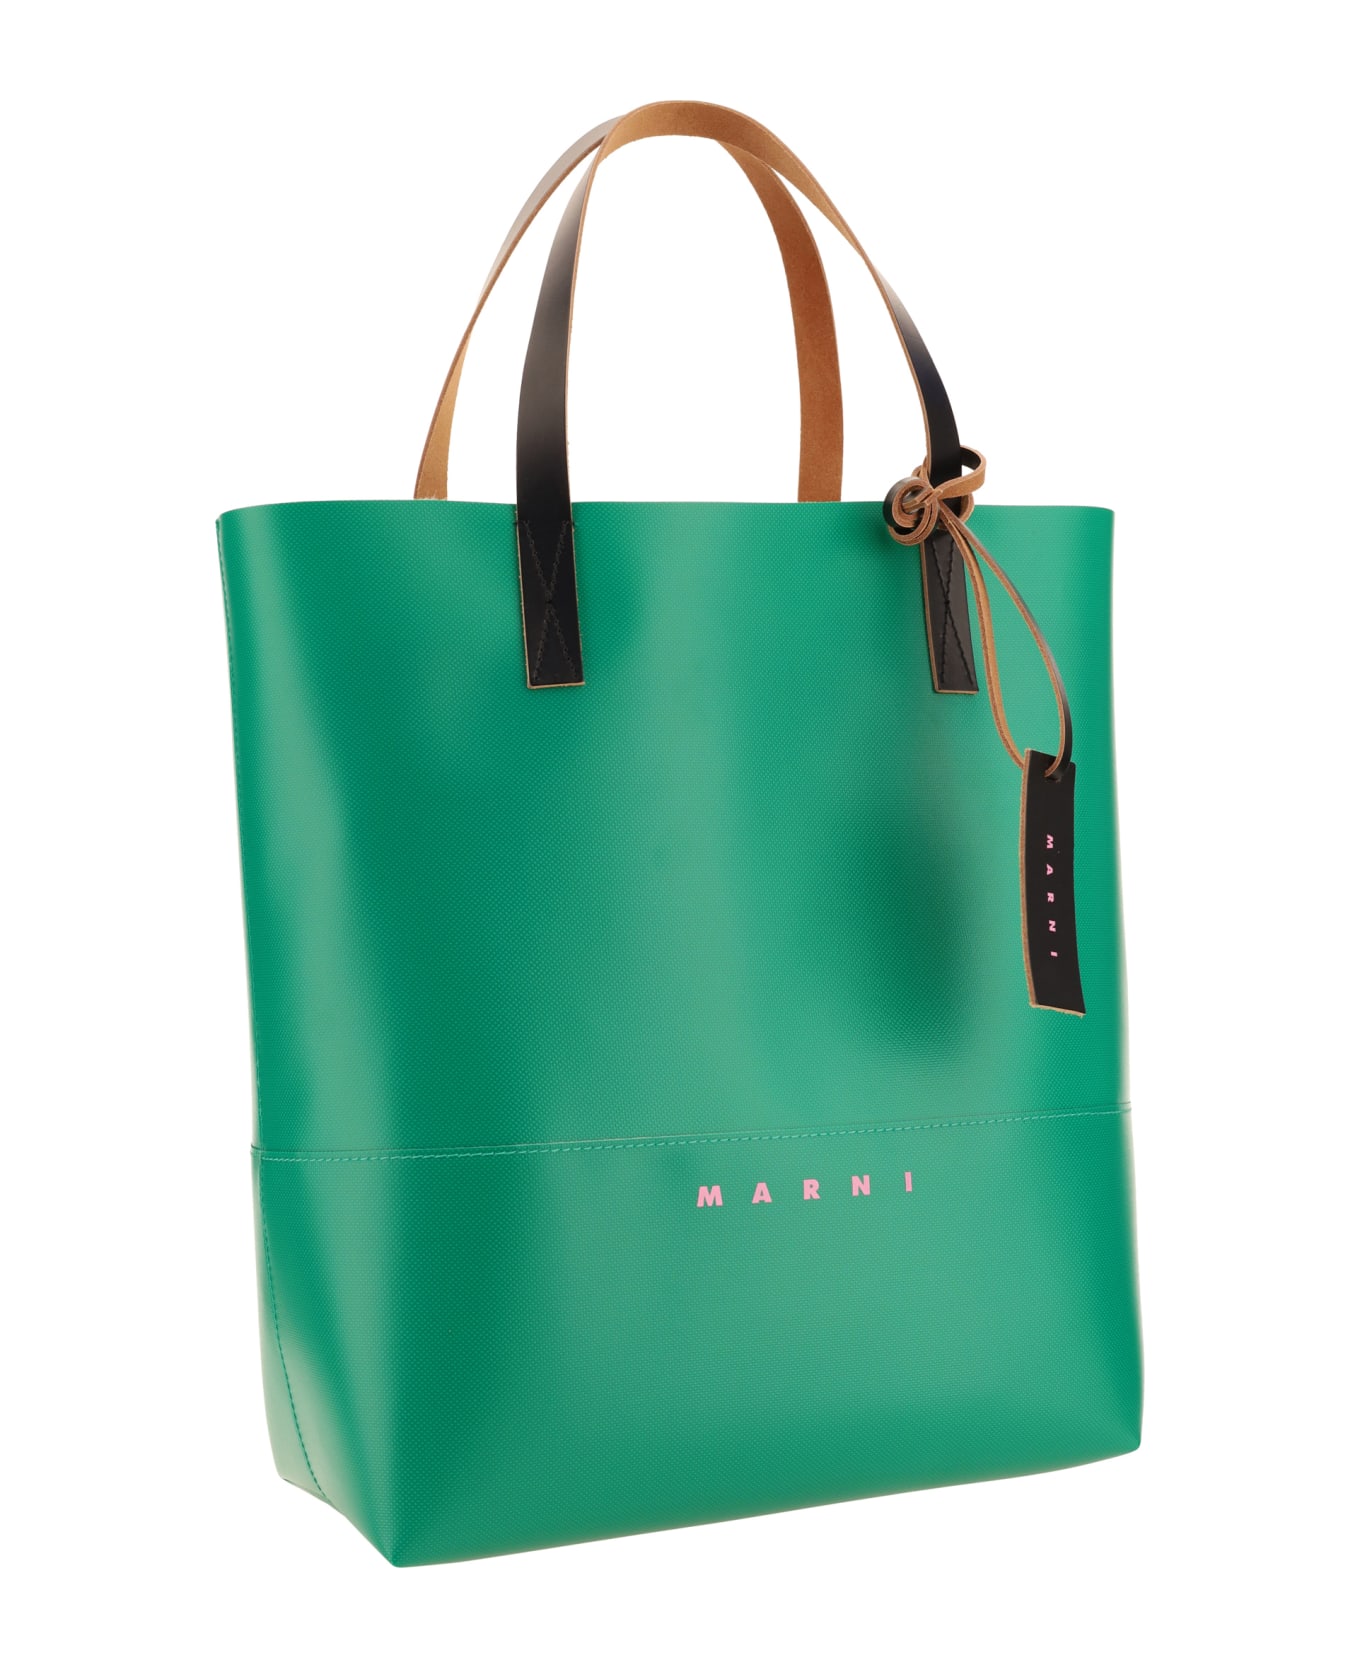 Marni Shoulder Bag - Water